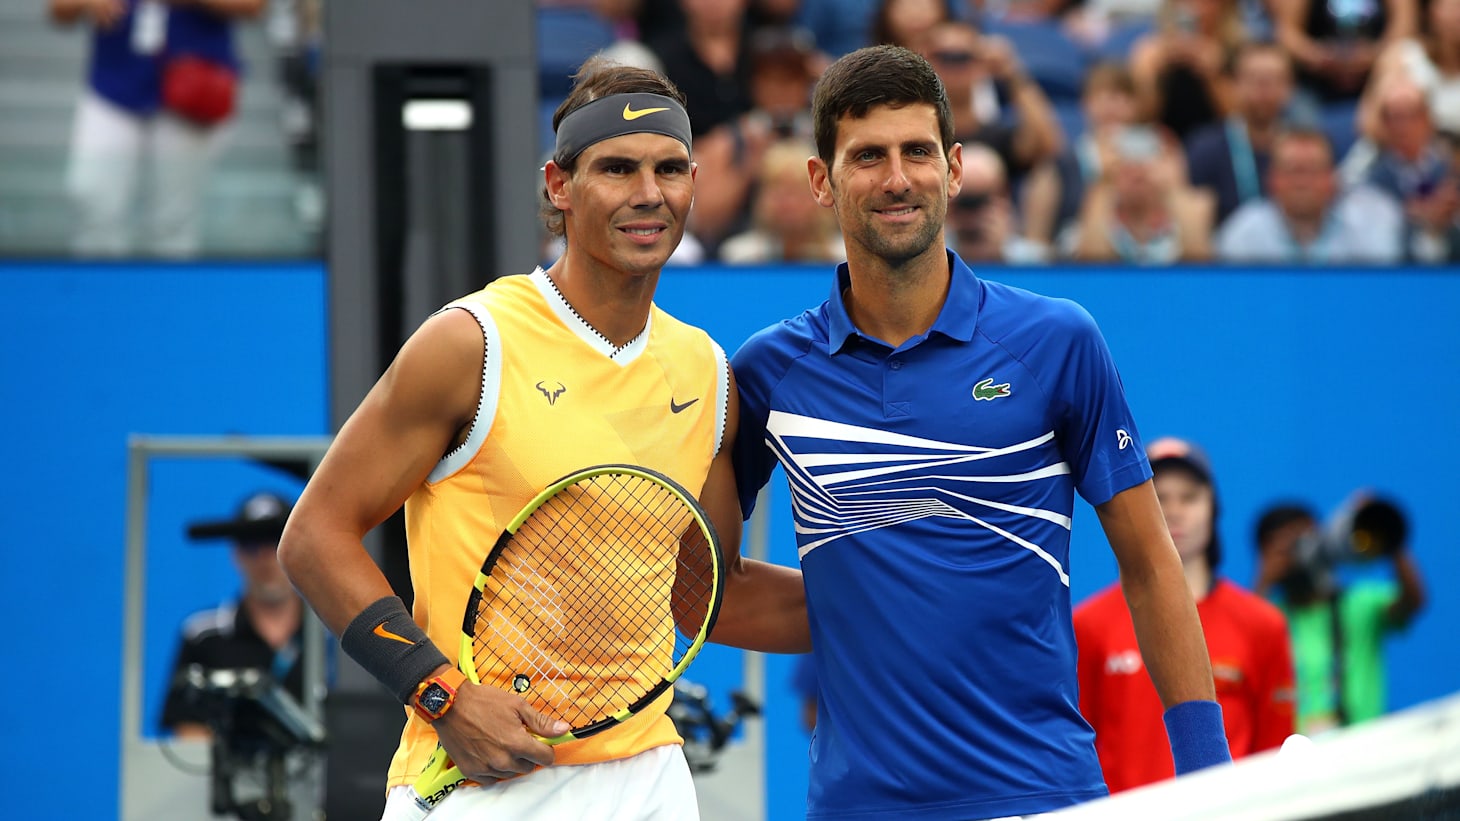 Rafael Nadal vs Novak Djokovic head-to-head and best matches